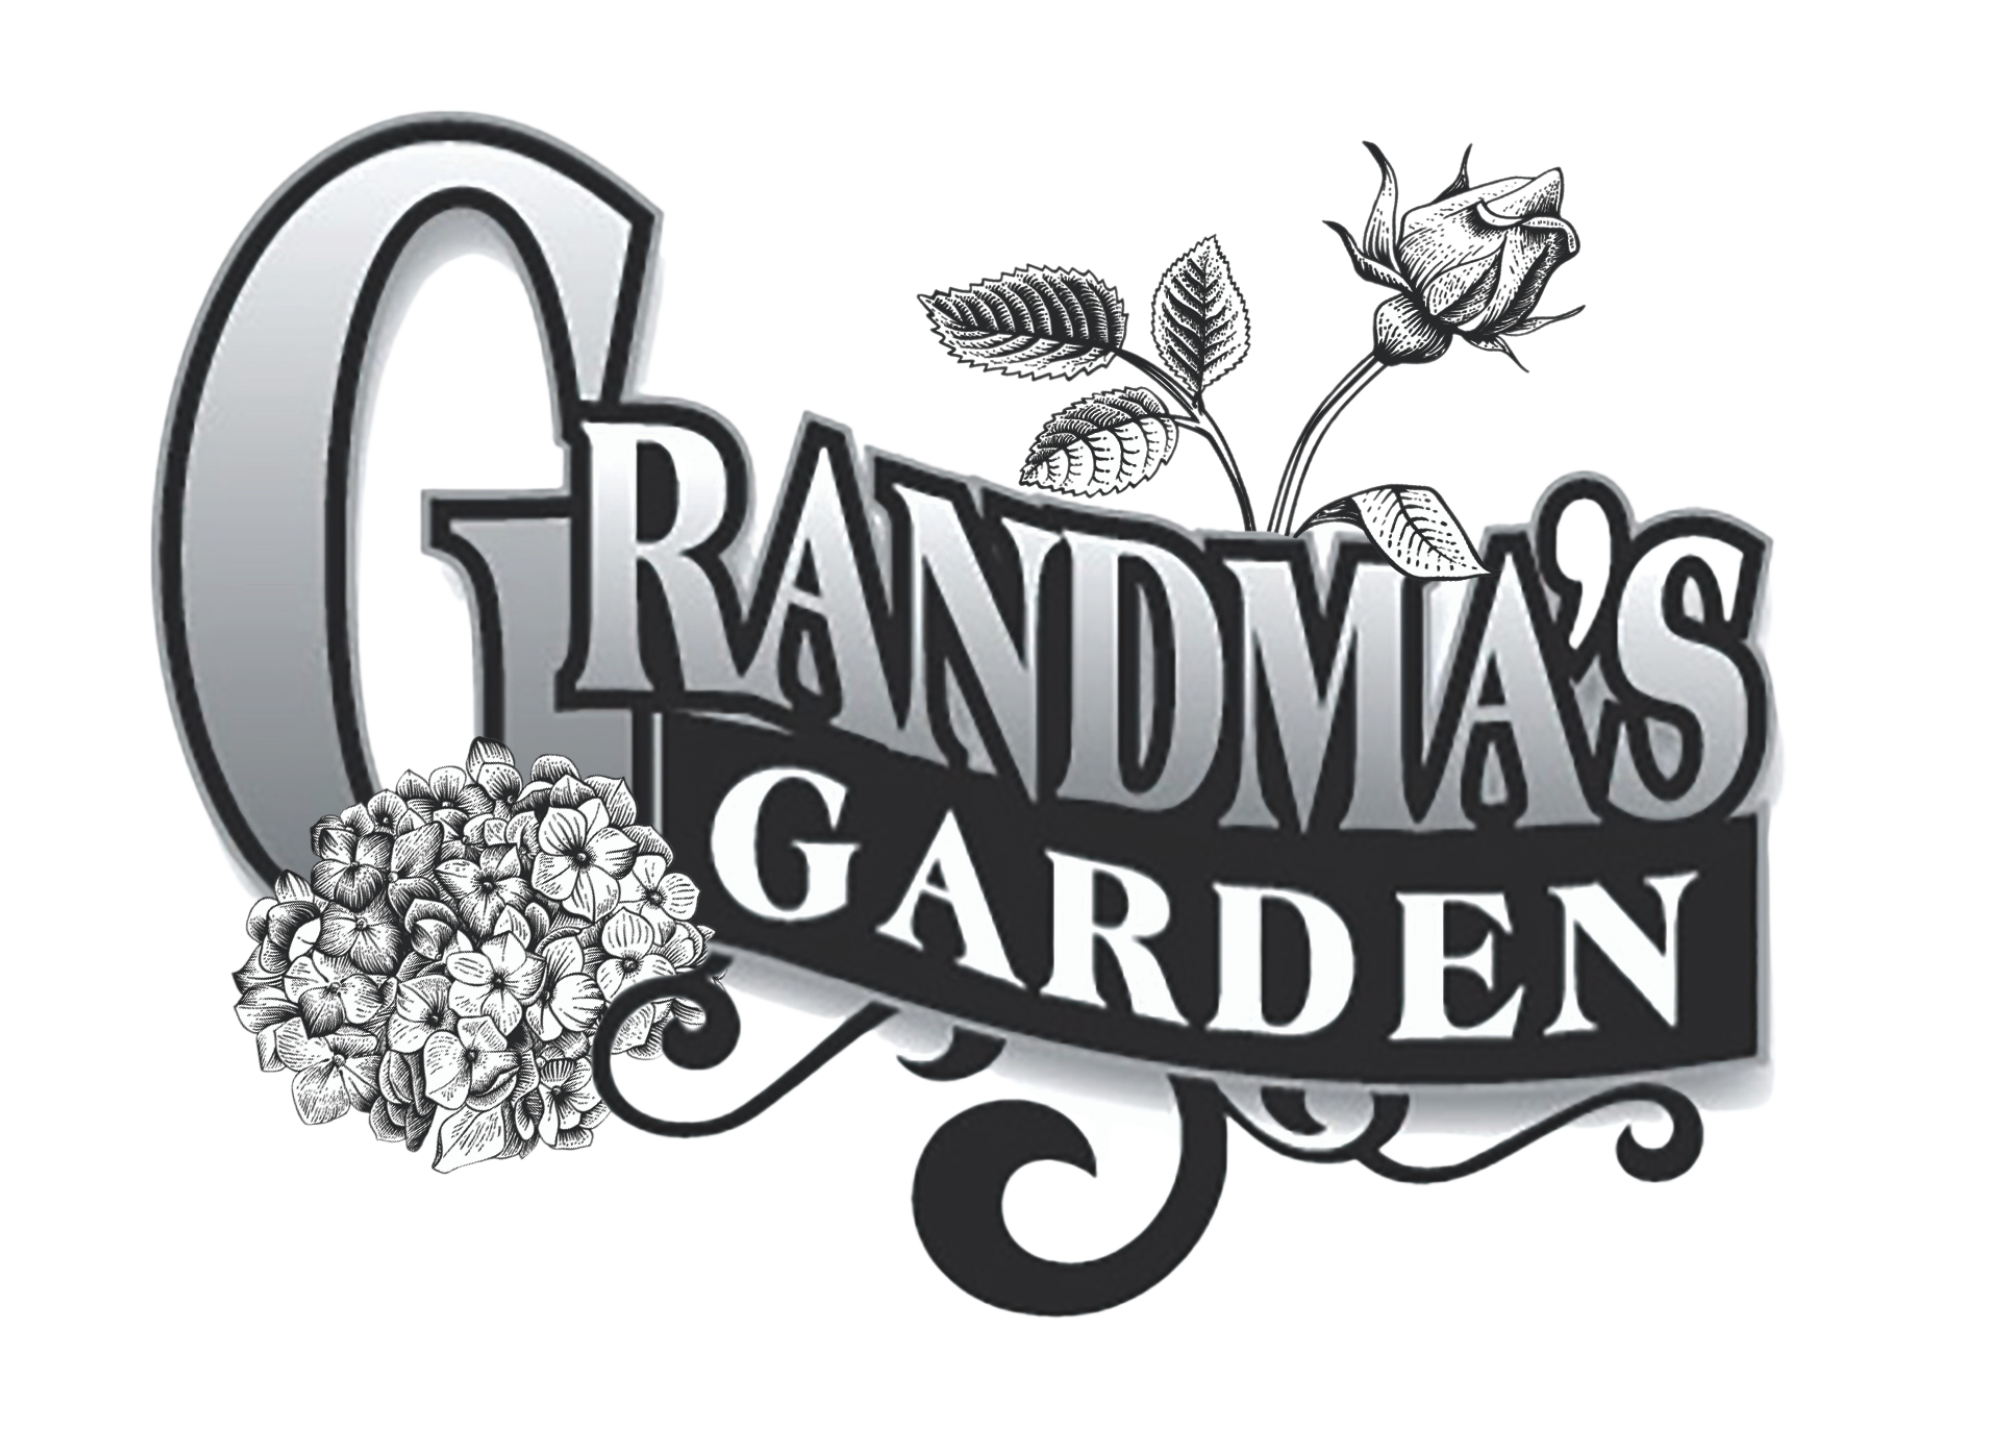 Grandma's Garden Ltd.